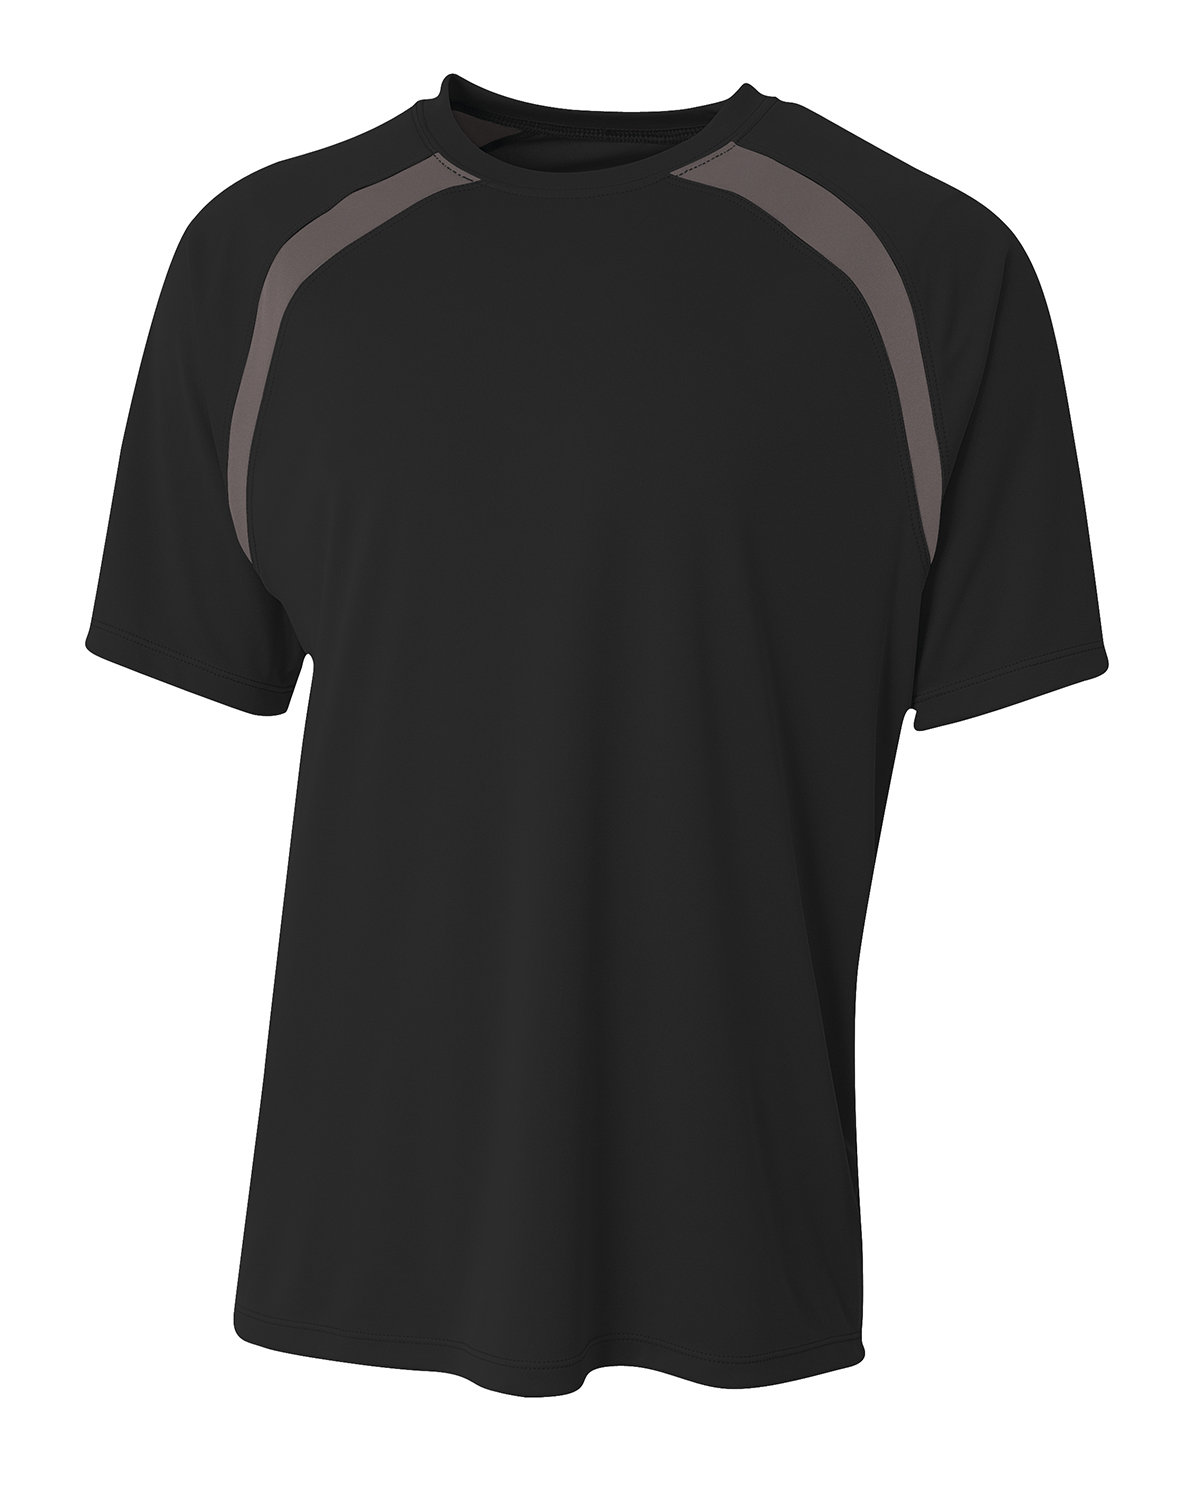 A4 NB3001 - Boy's Spartan Short Sleeve Color Block Crew Neck T-Shirt